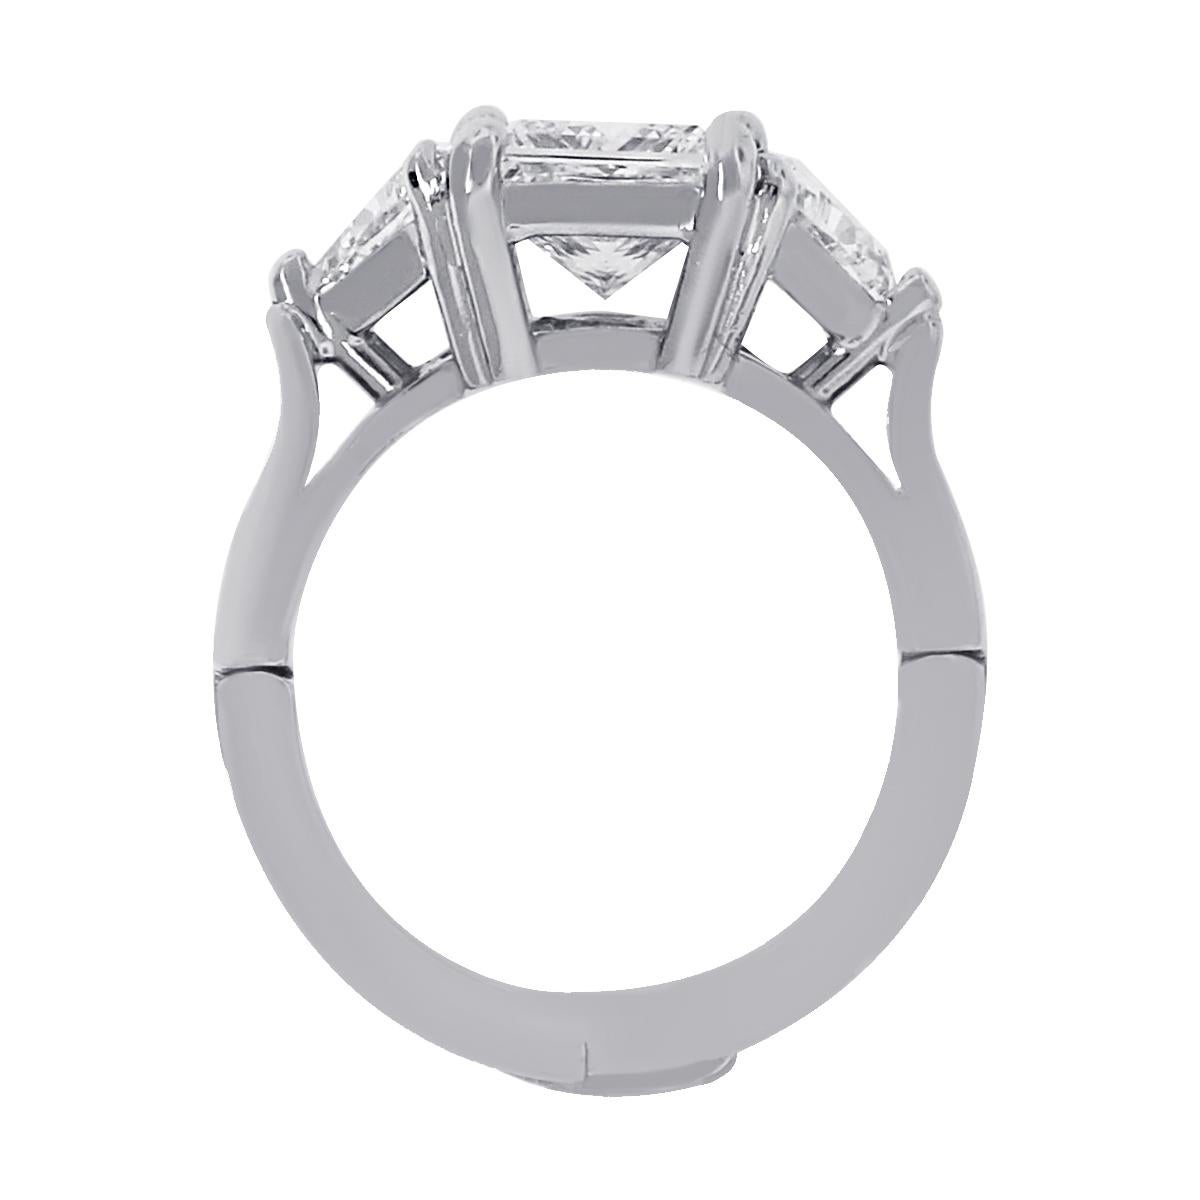 1.63 carat diamond ring